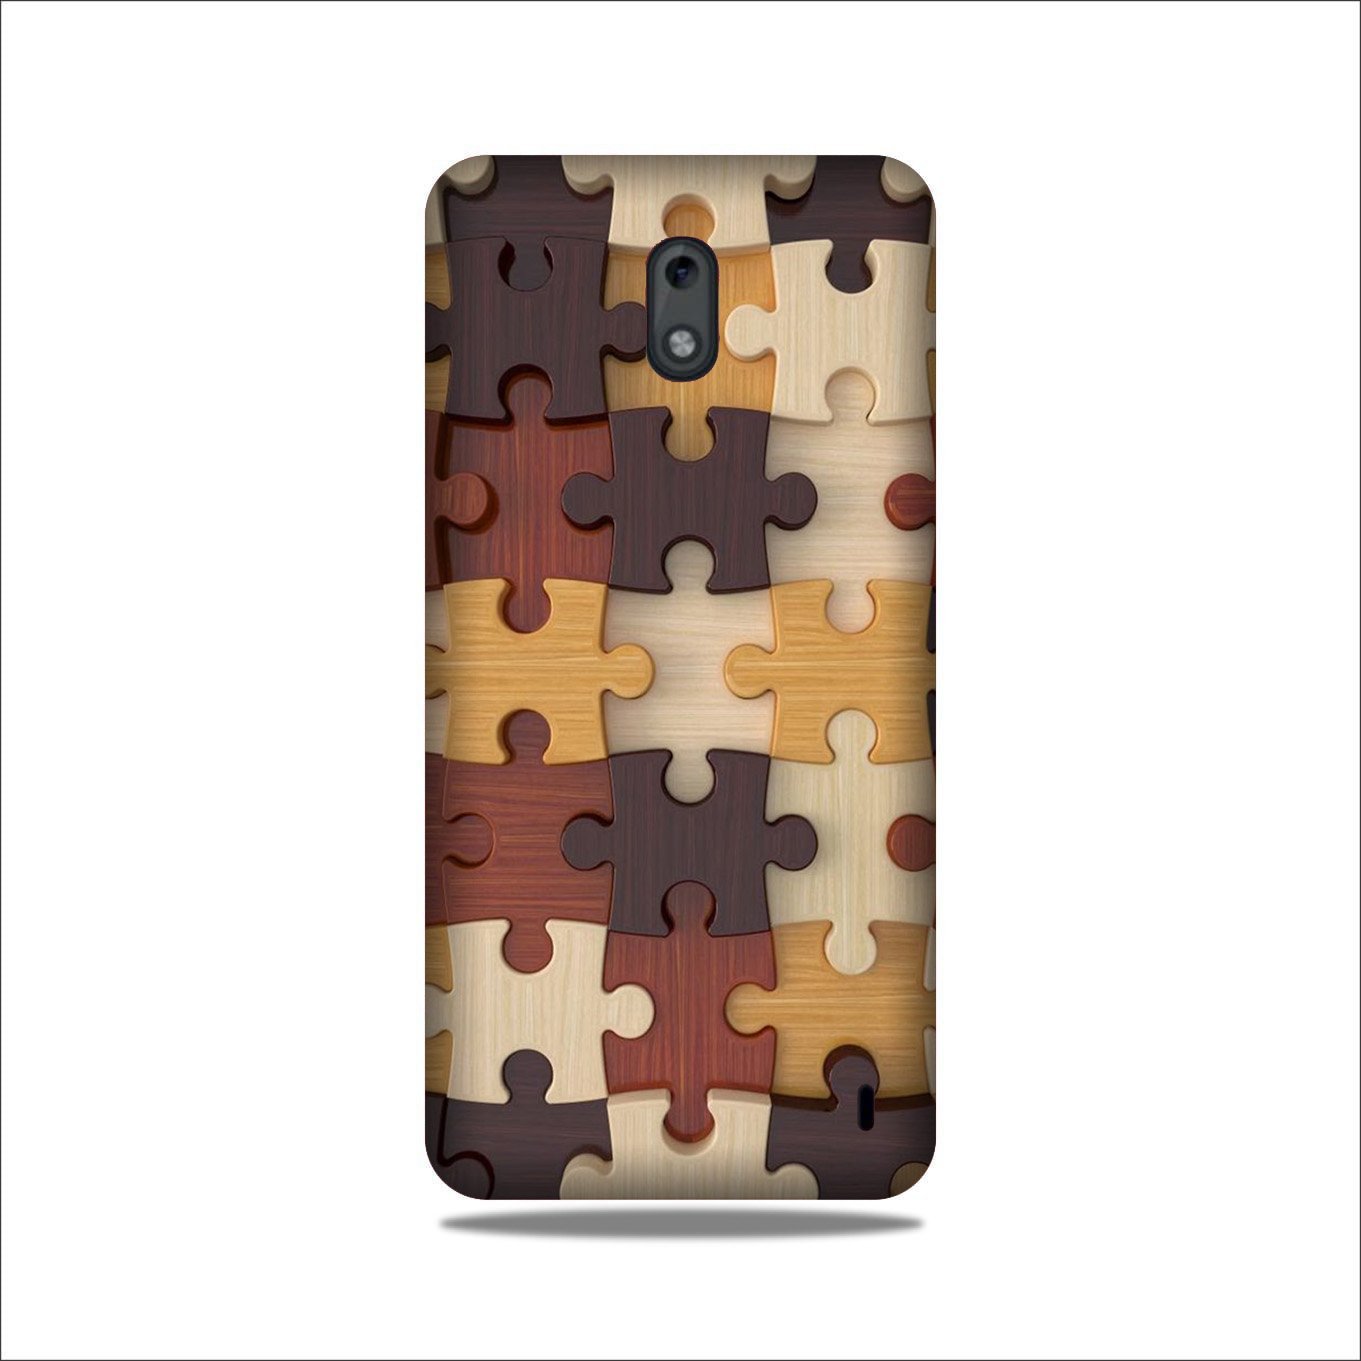 Puzzle Pattern Case for Nokia 2.2 (Design No. 217)